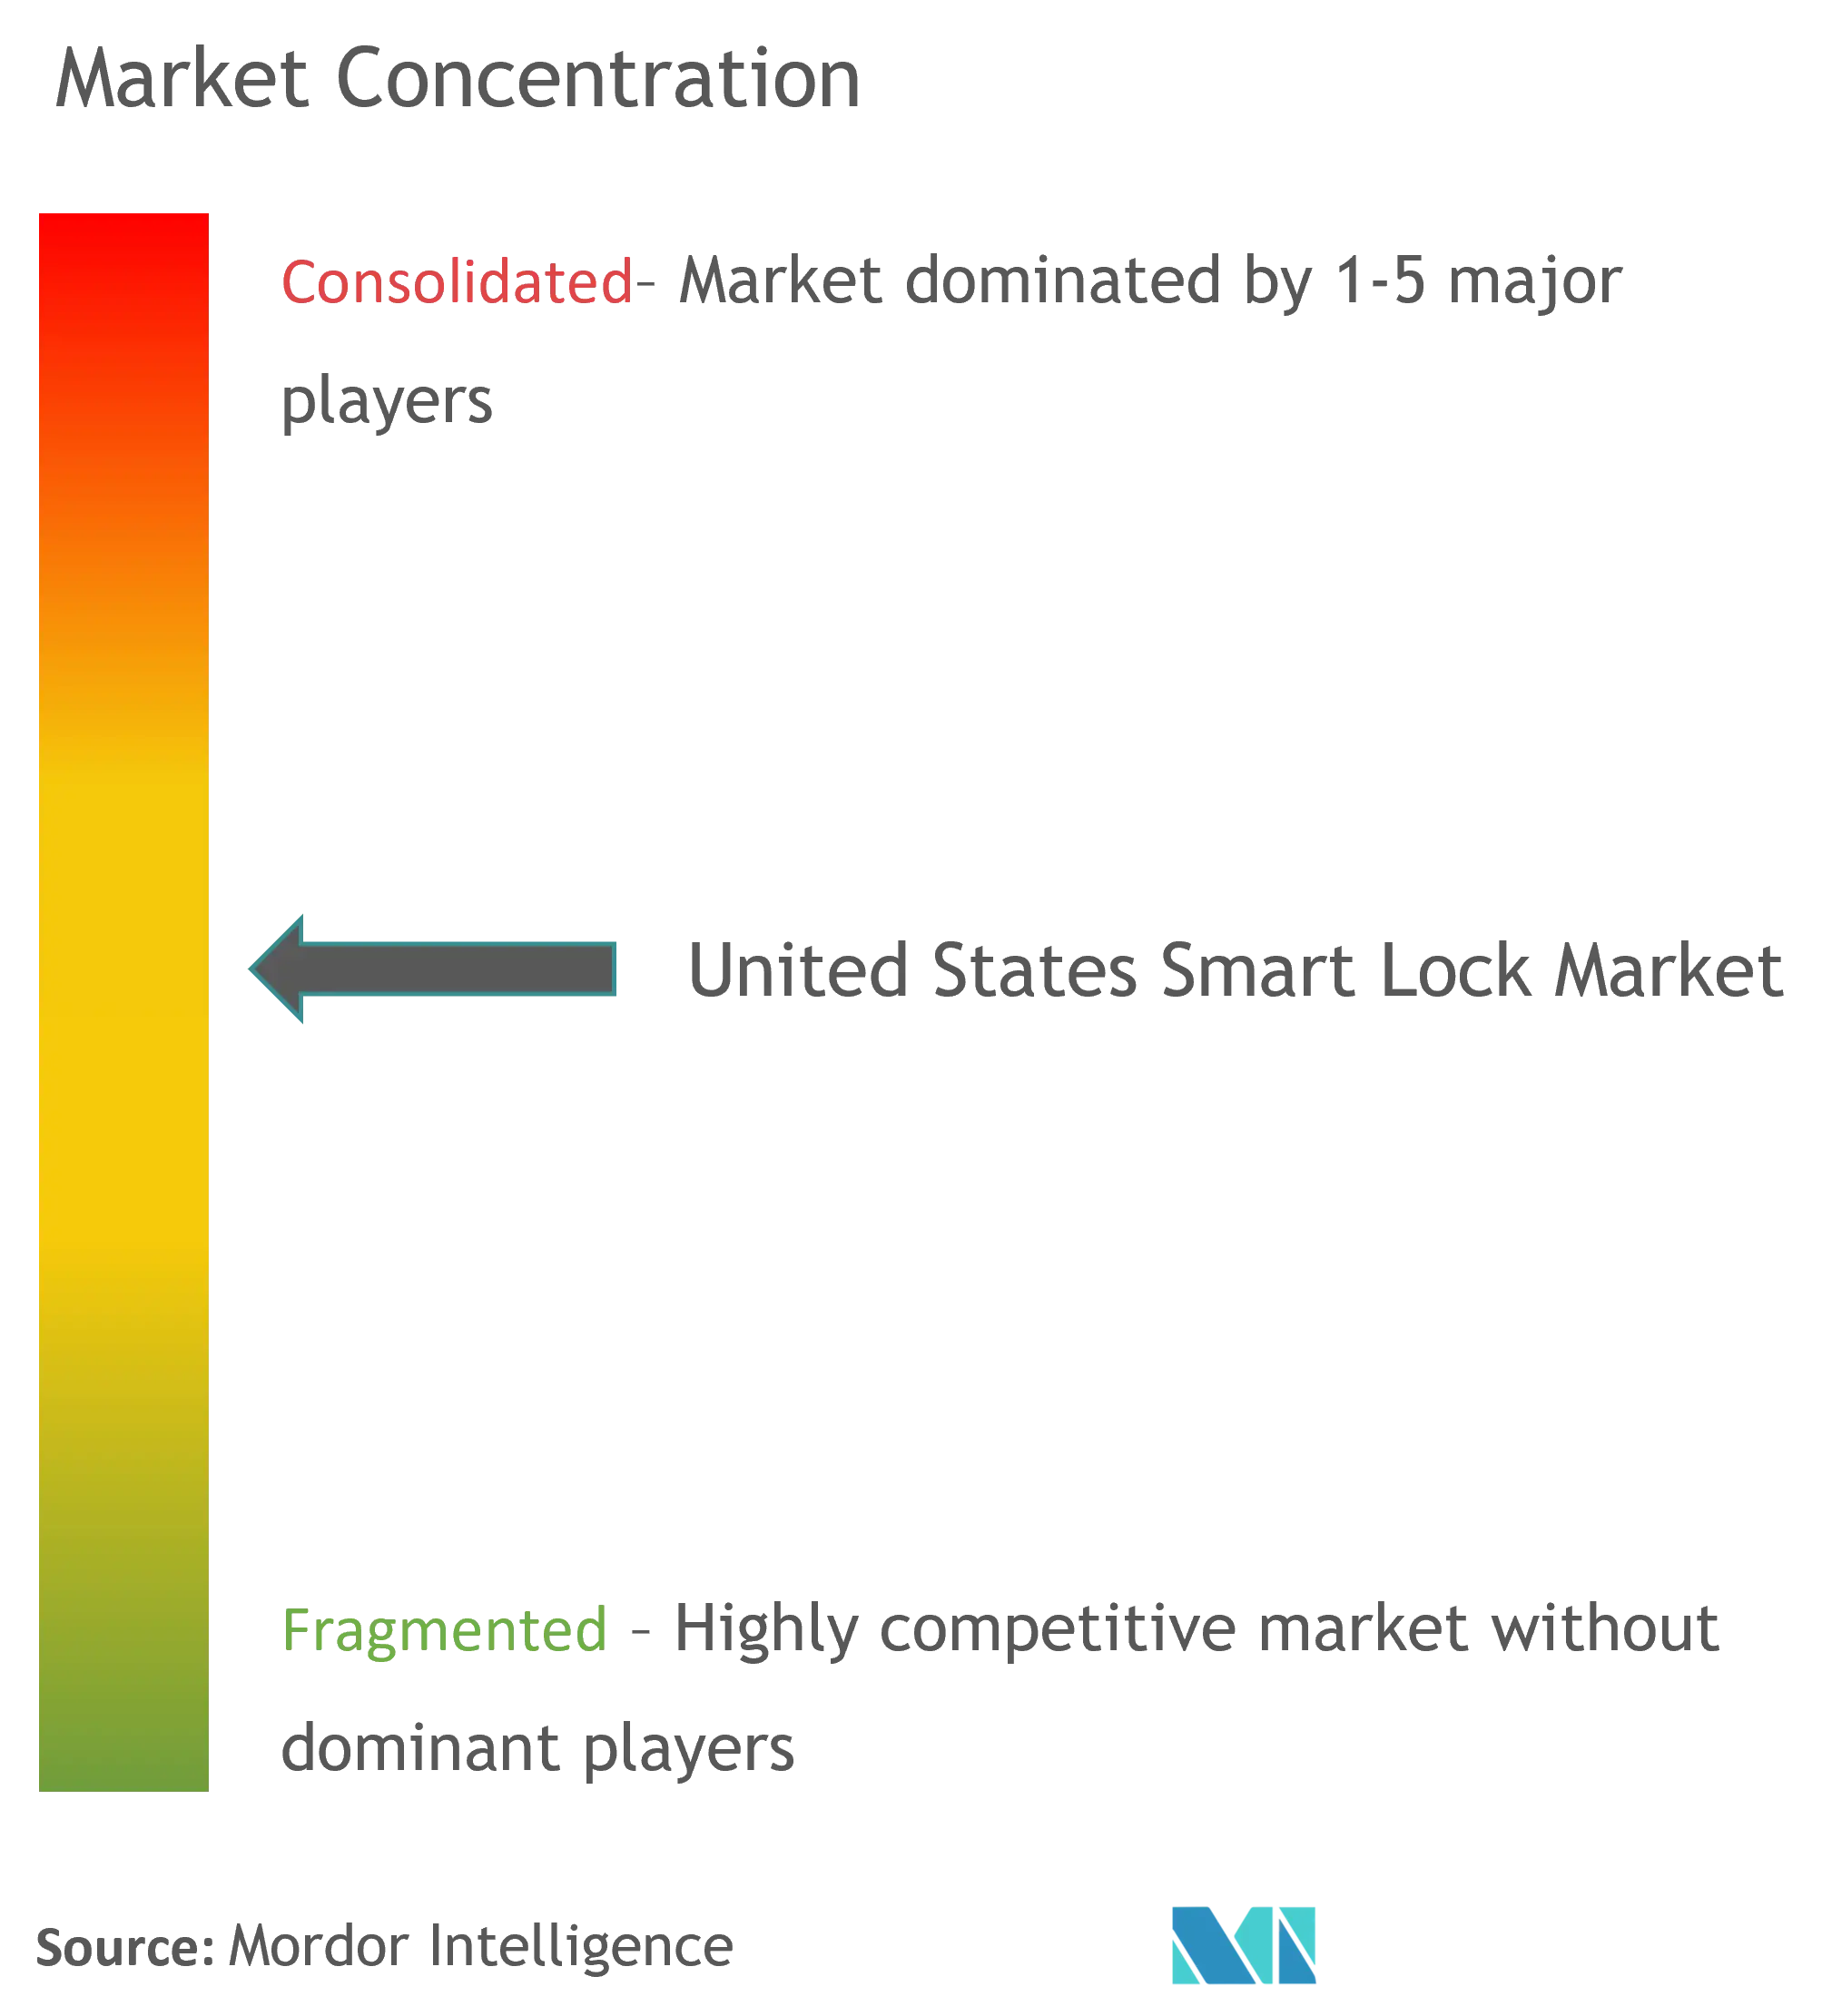 United States Smart Lock Market